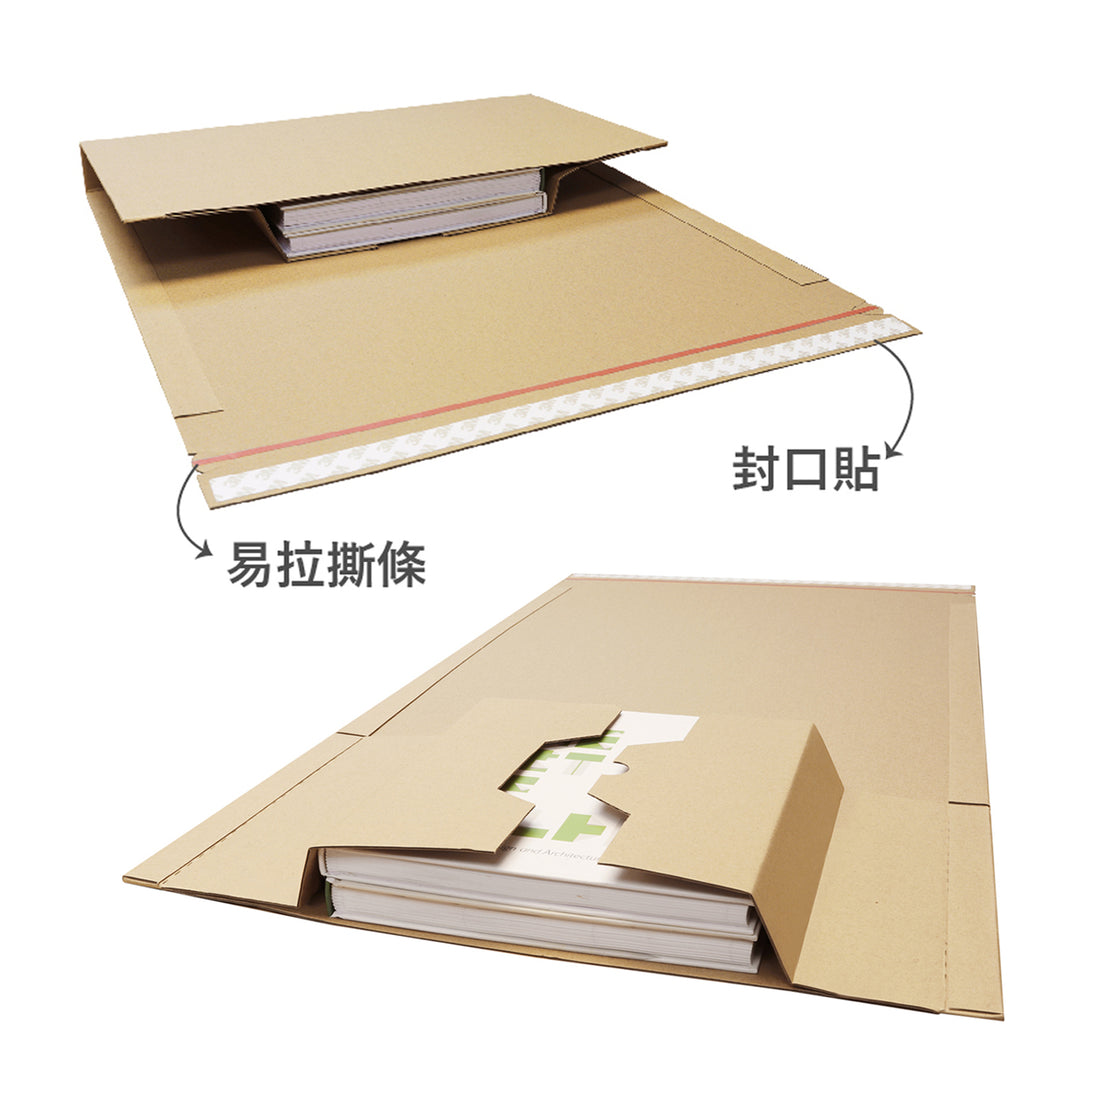 Adjustable Mailer Box 百摺郵寄盒